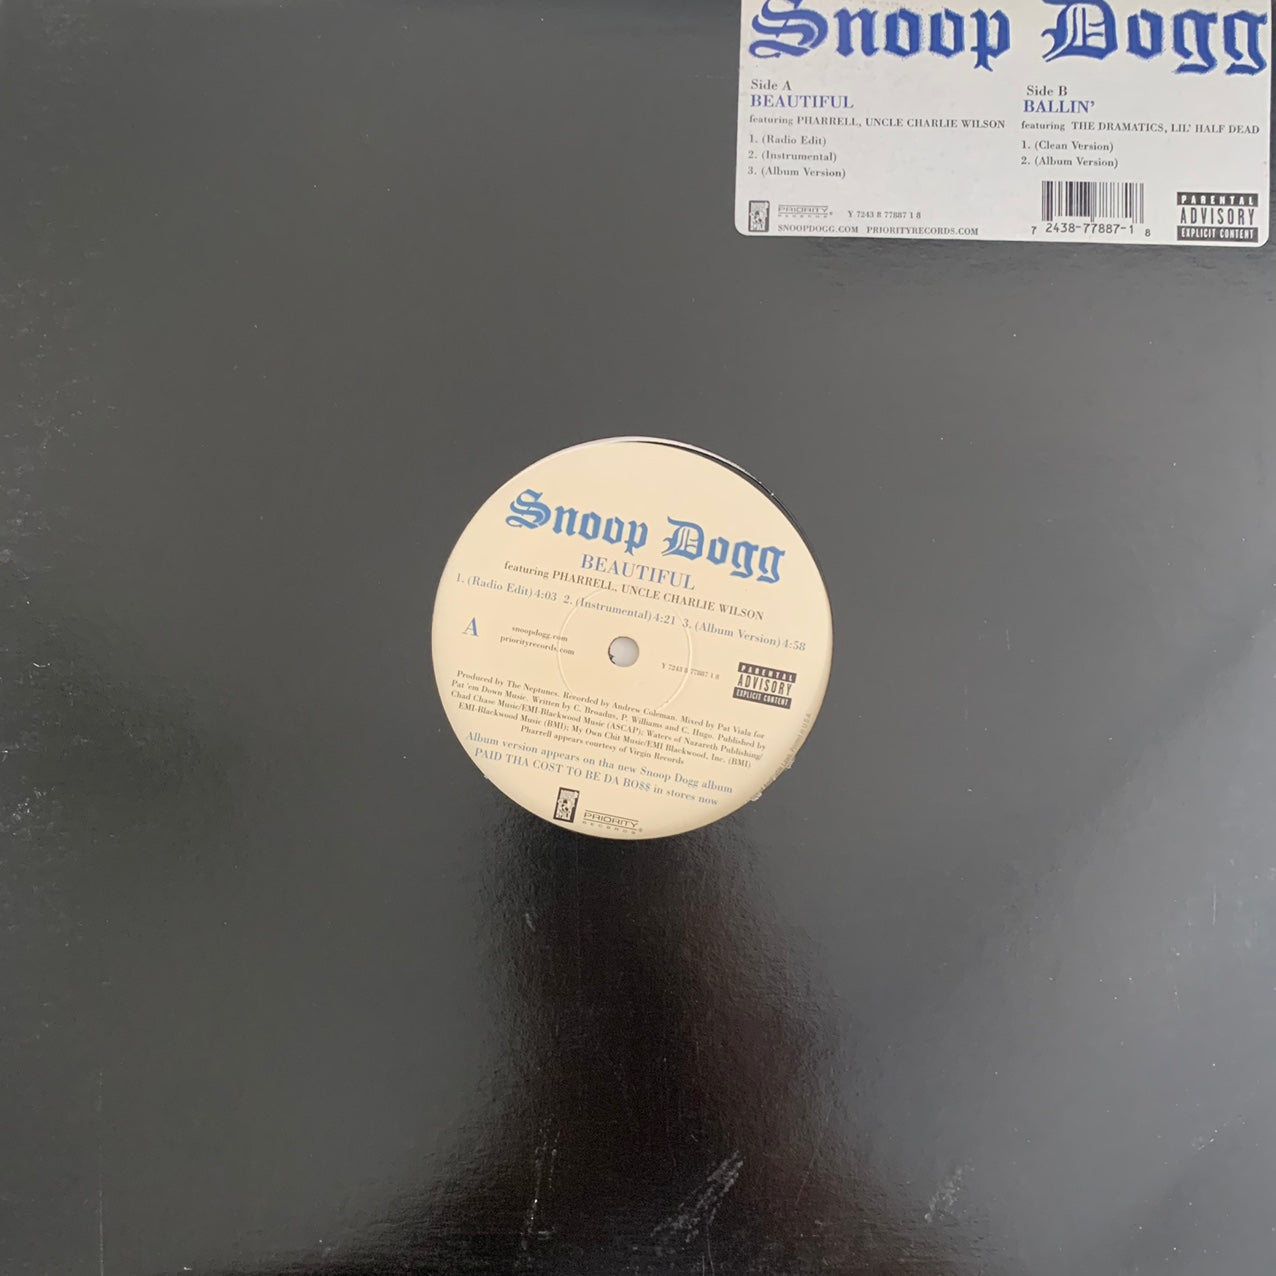 Snoop Dogg Feat Pharrell & Charlie Wilson “Beautiful” / “Ballin” Feat The Dramatics and Lil Half Dead 5 Version 12inch Vinyl